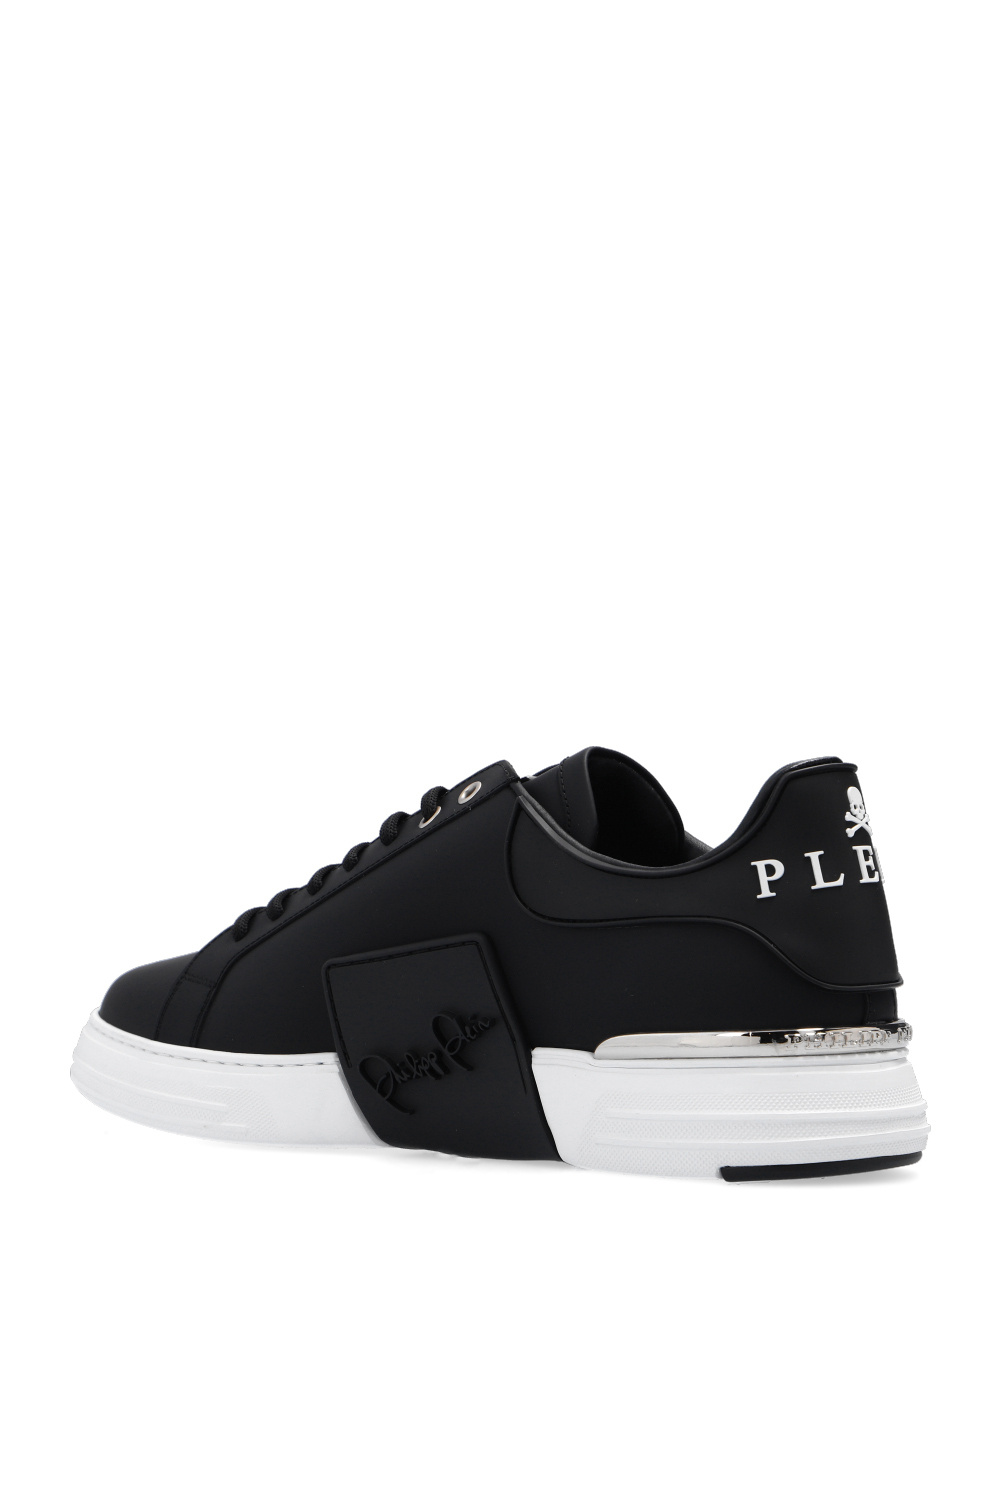 Philipp Plein ‘Phantom Kick$’ sneakers